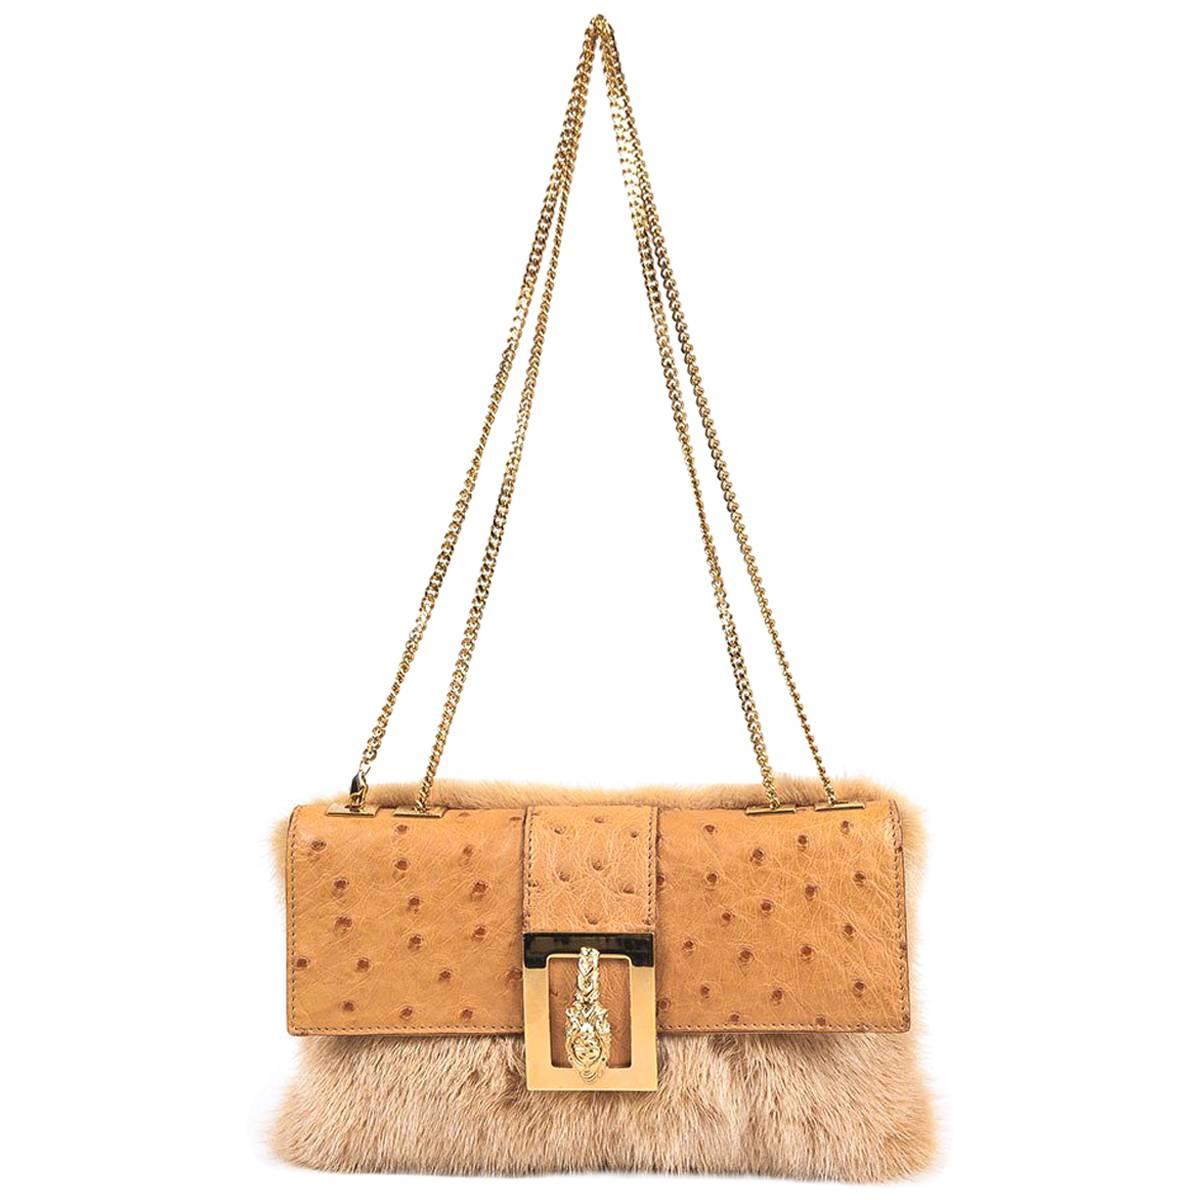 Gucci Tom Ford Tan Ostrich Leather Mink Fur Chain Strap Tiger Flap Shoulder Bag For Sale